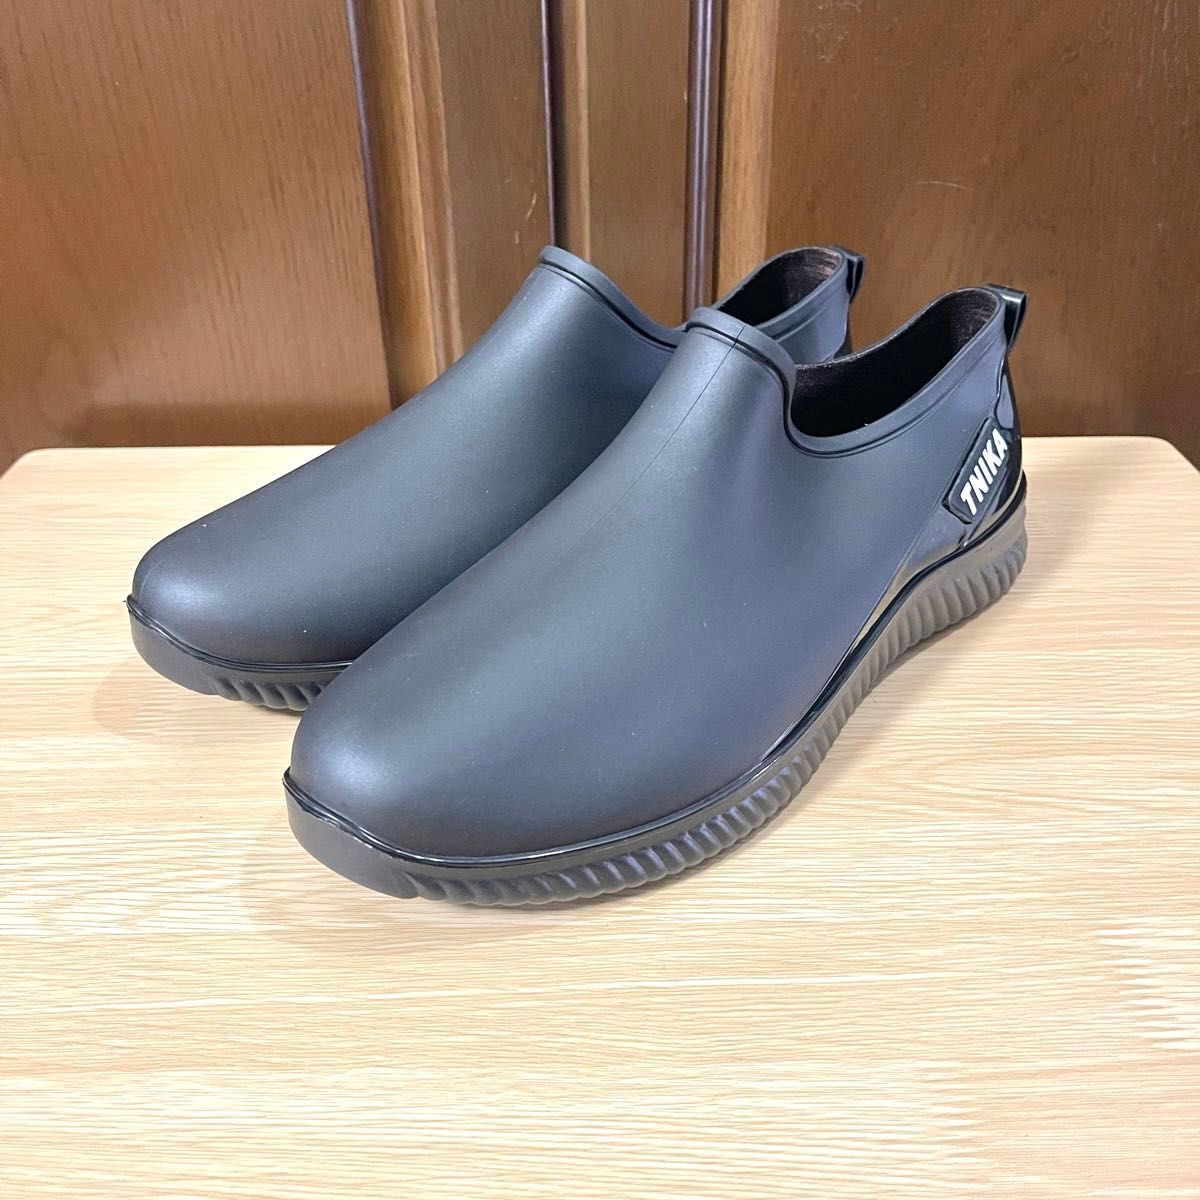  rain boots boots rain shoes men's shoes complete waterproof outdoor black 25.0